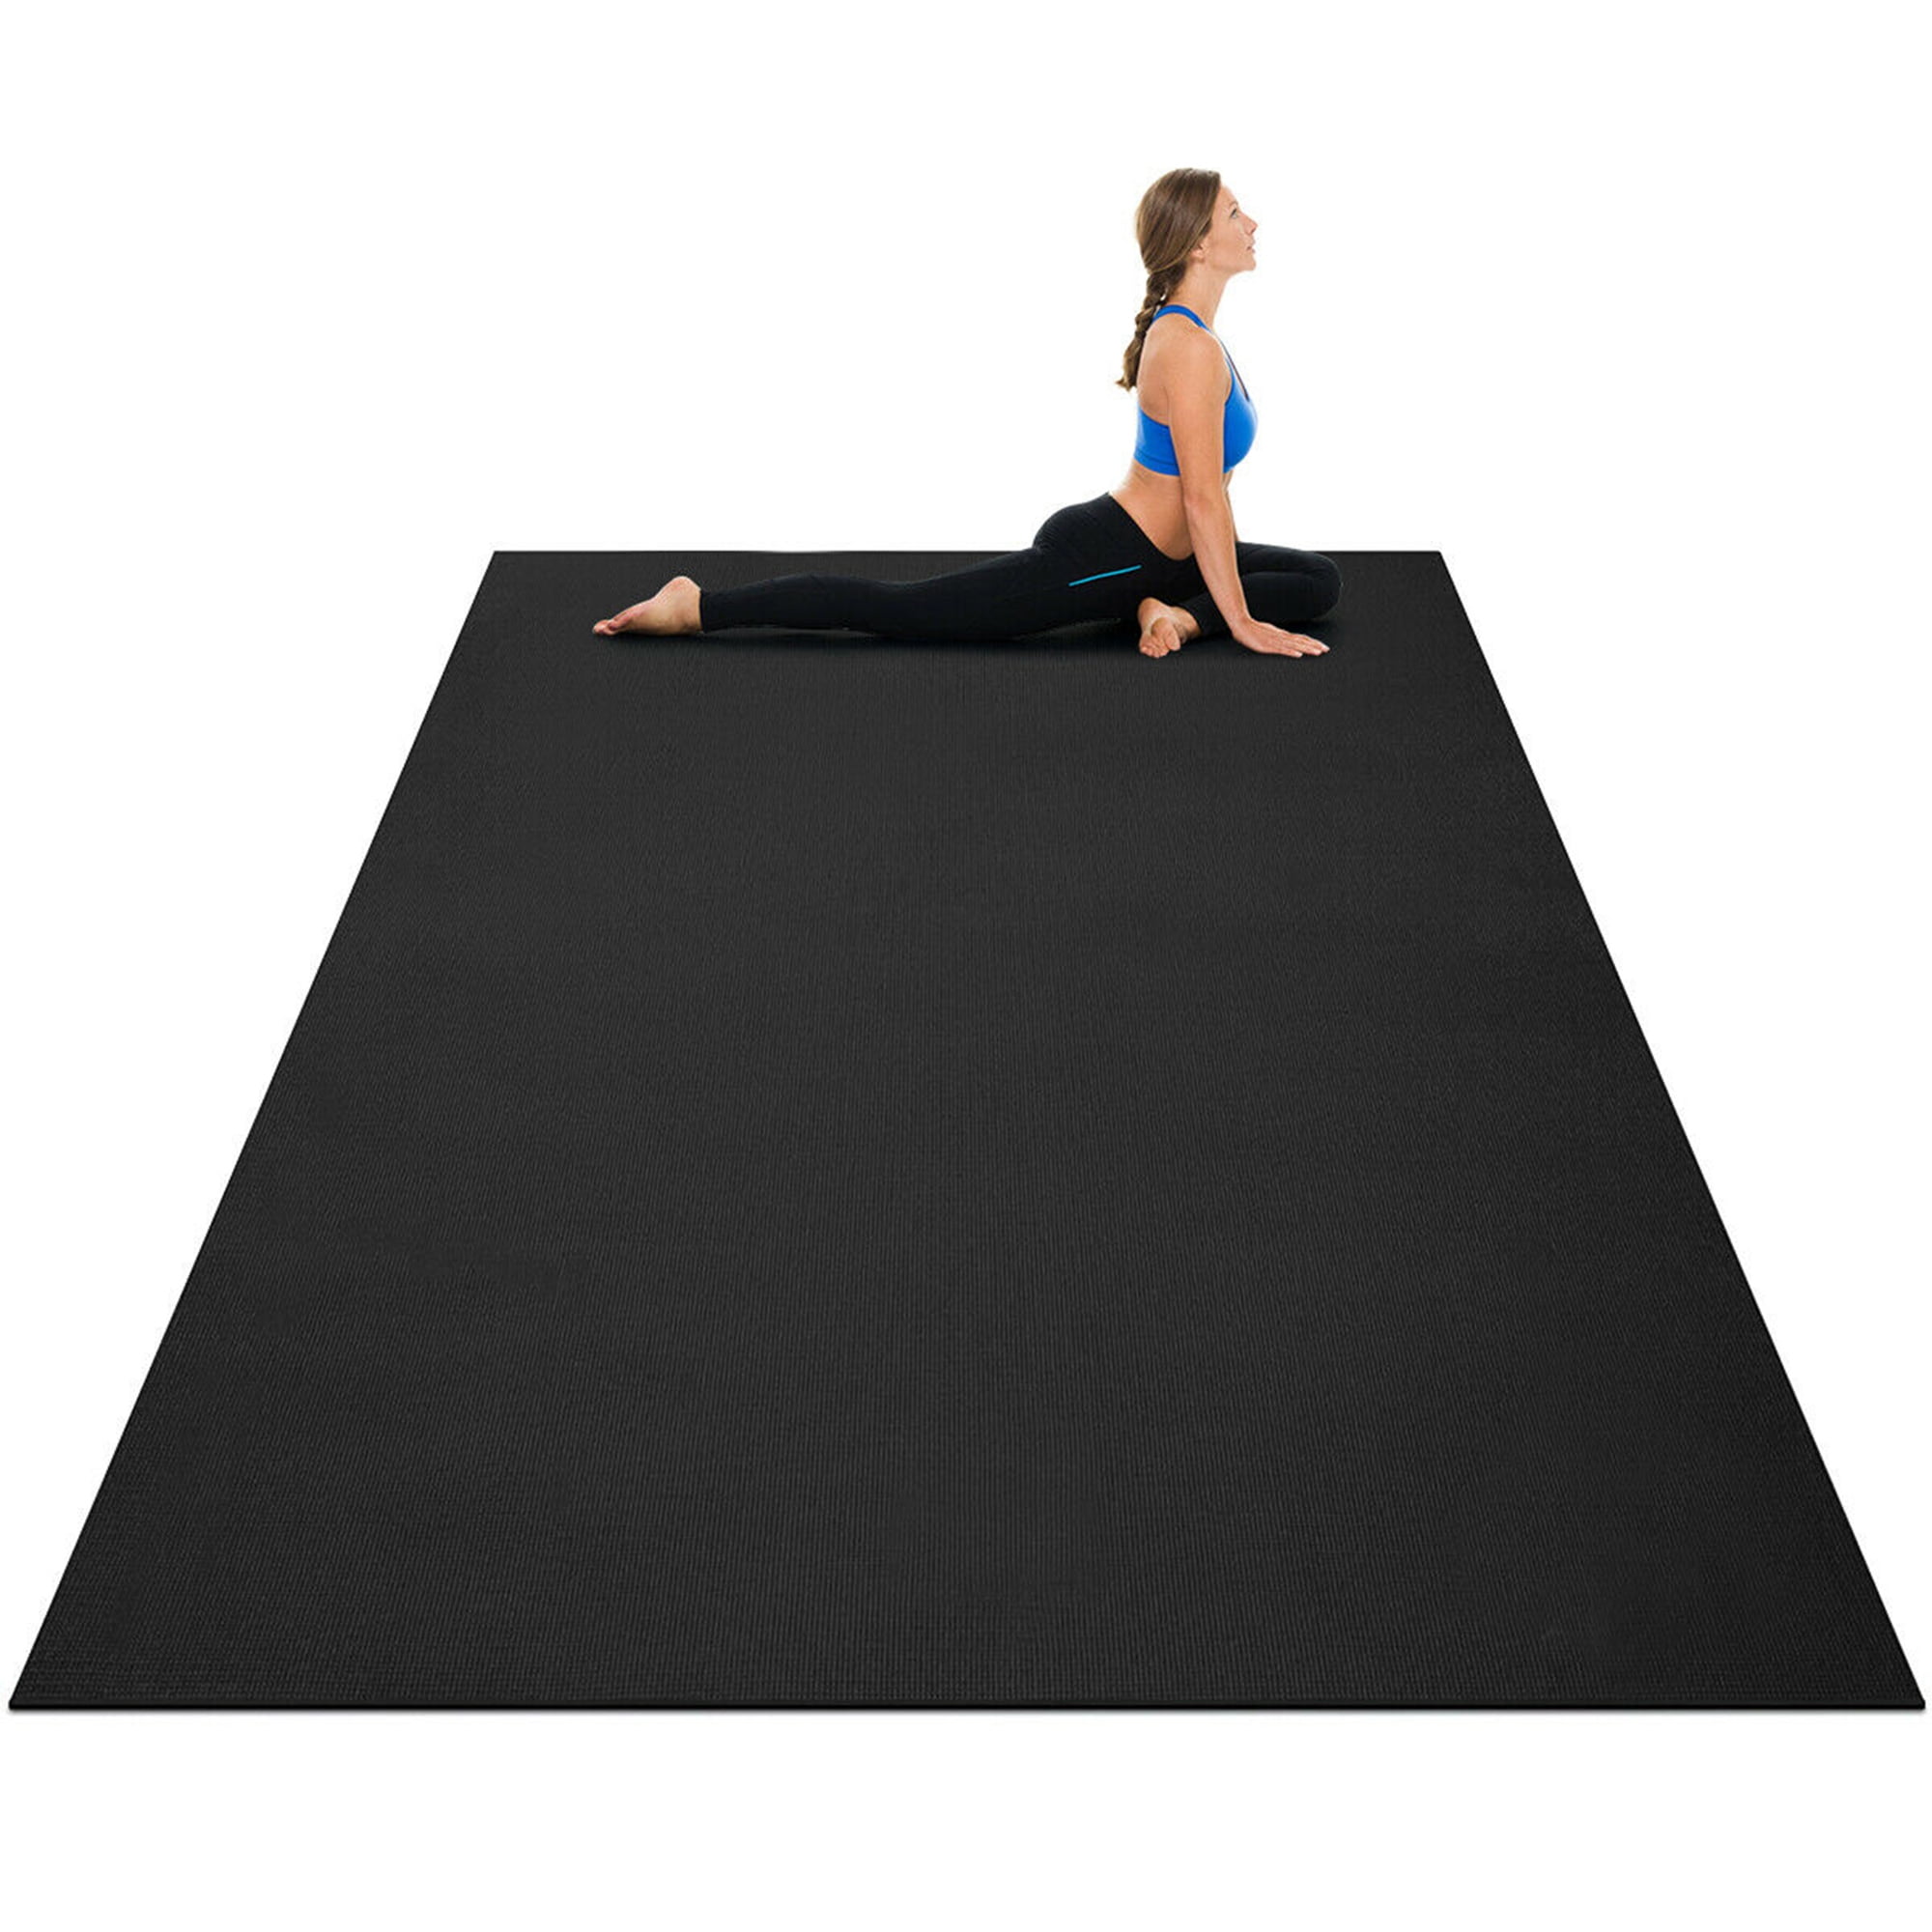 Black Interlocking Mats Yoga Exercise Gym Fitness Gymnastic Floor Mat Soft Foam 